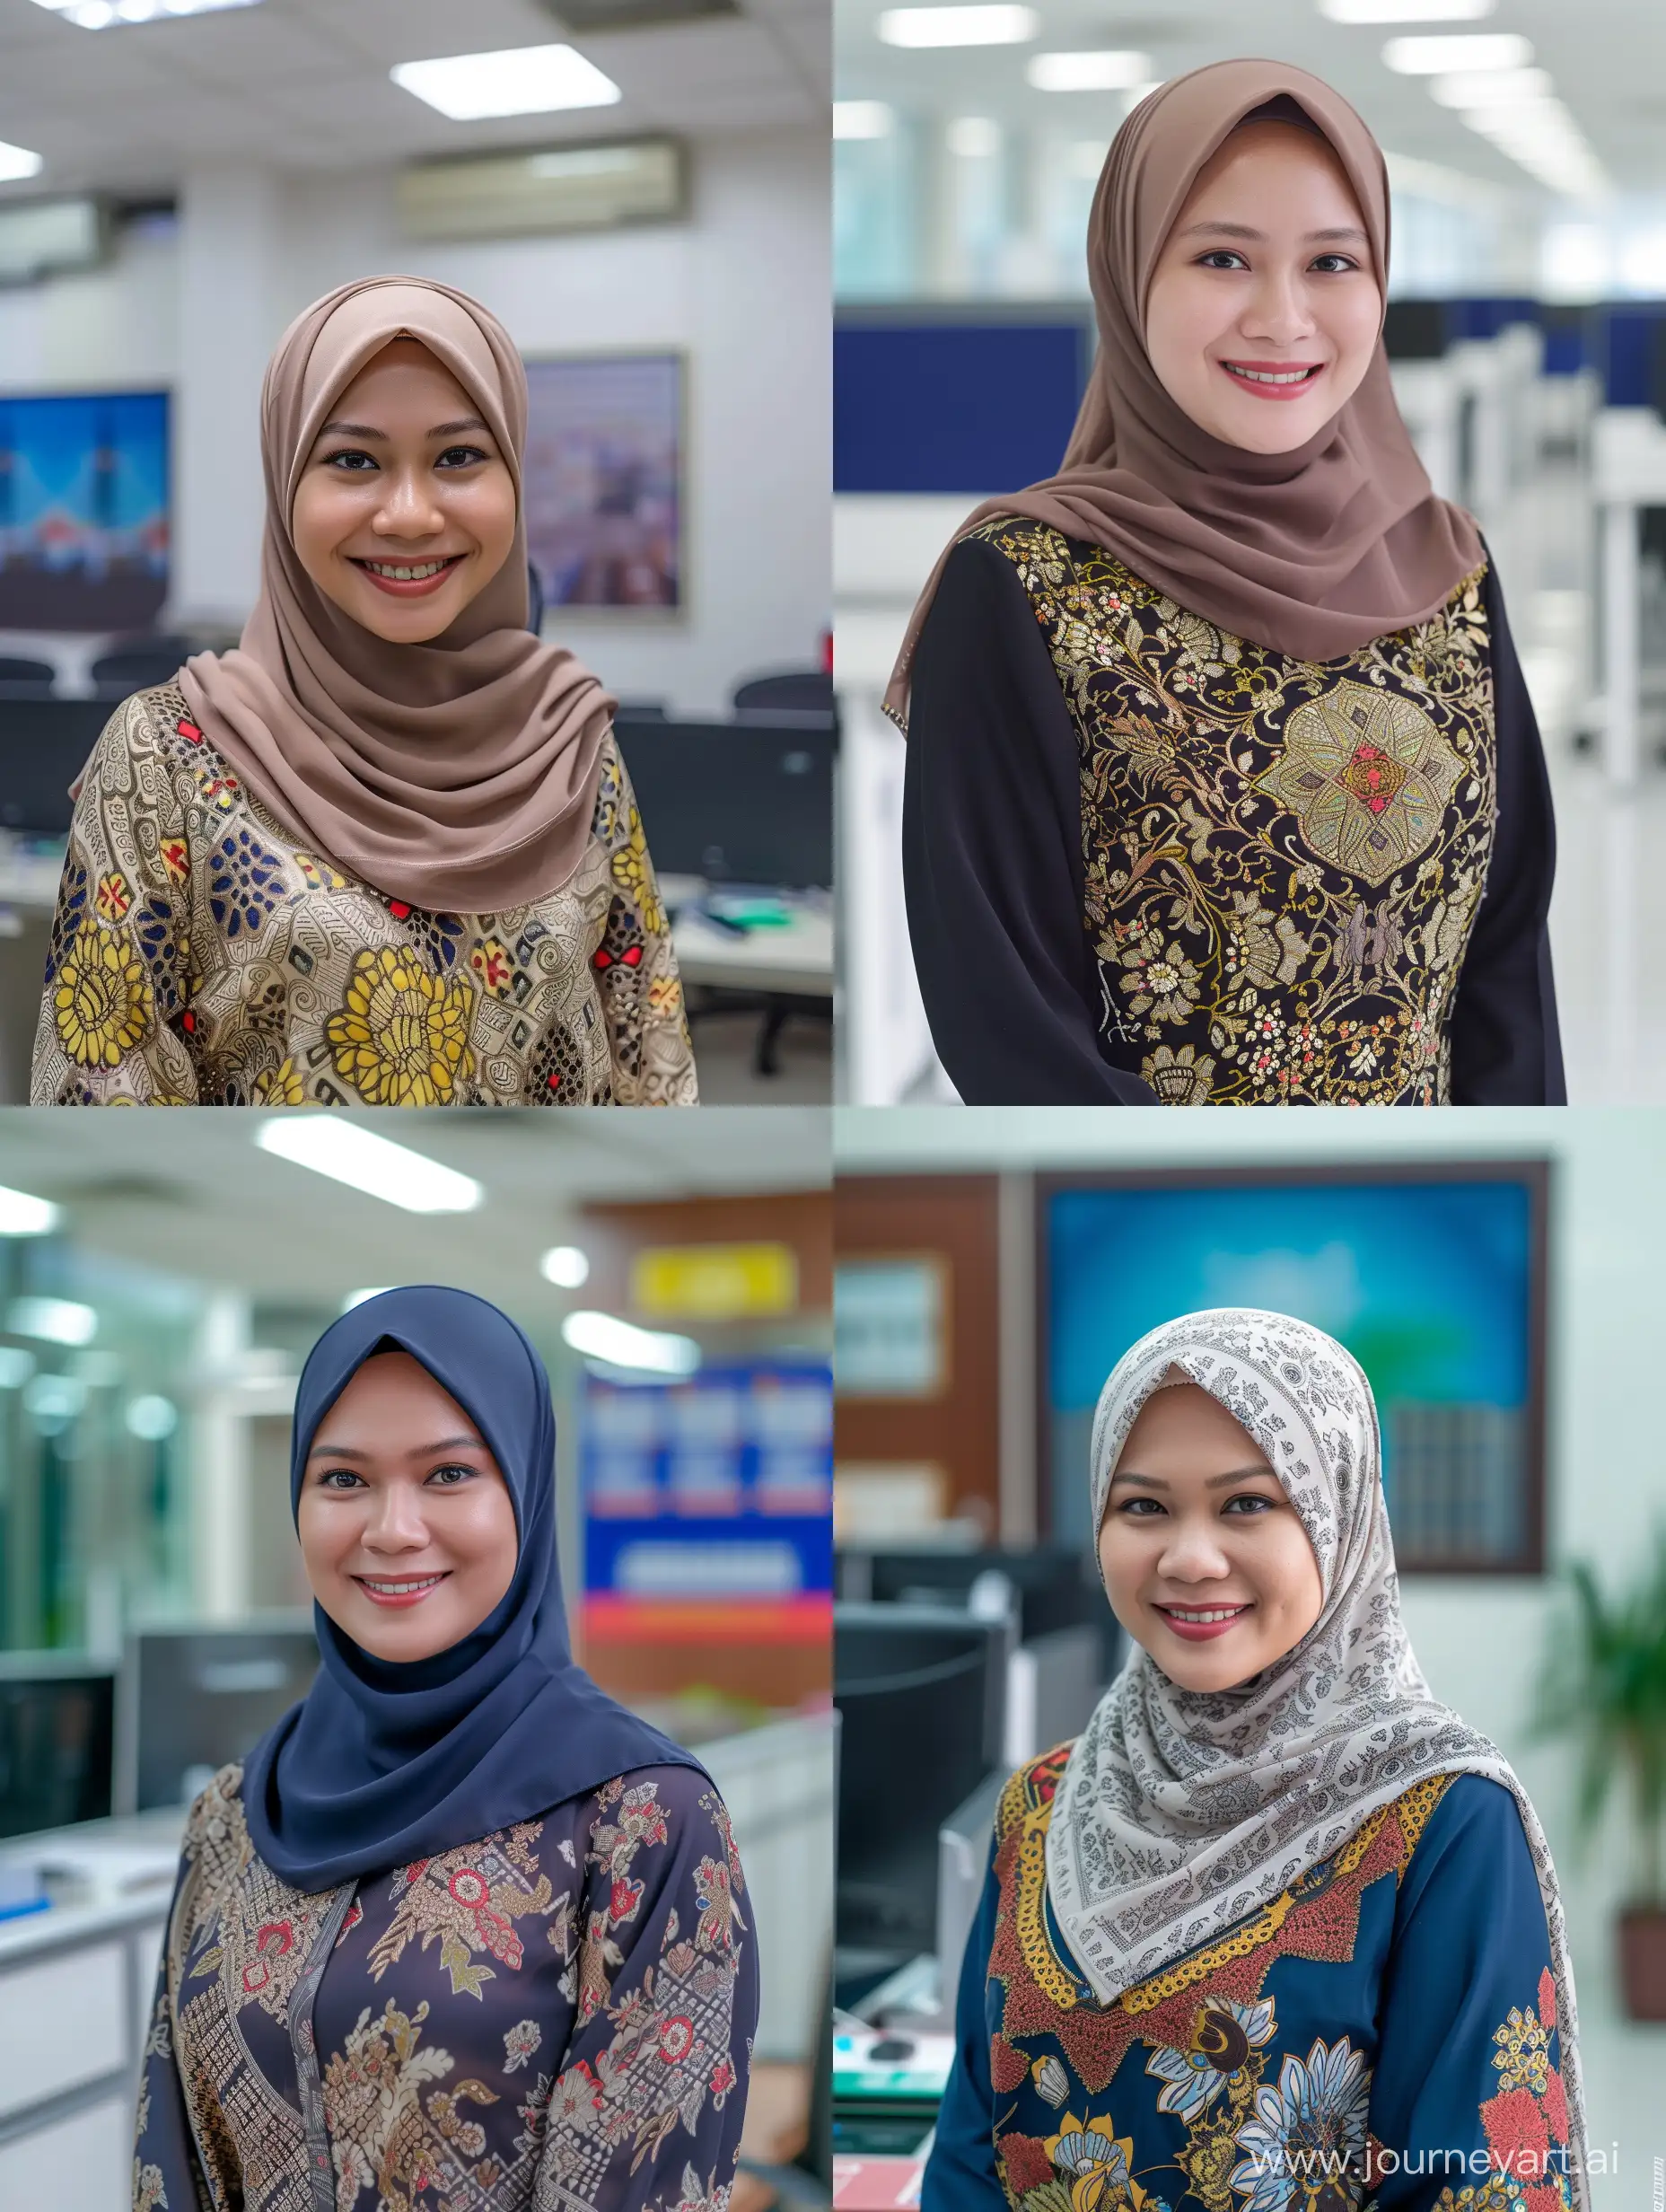 Smiling-Malay-Civil-Servant-in-Baju-Kurung-at-Government-Office